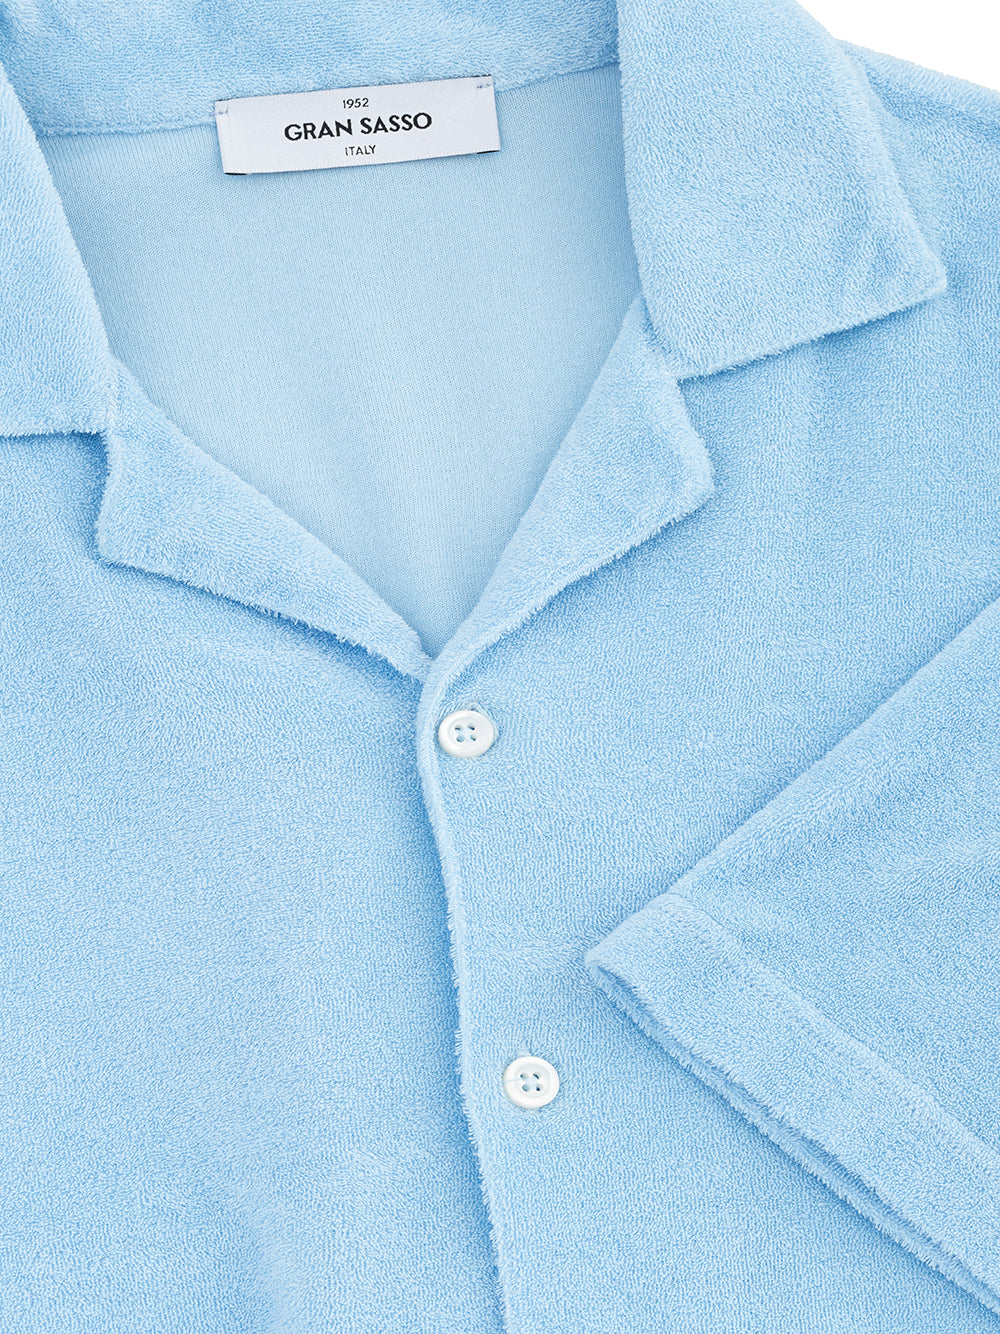 Light Blue Half Sleeve Shirt in Gran Sasso Terry